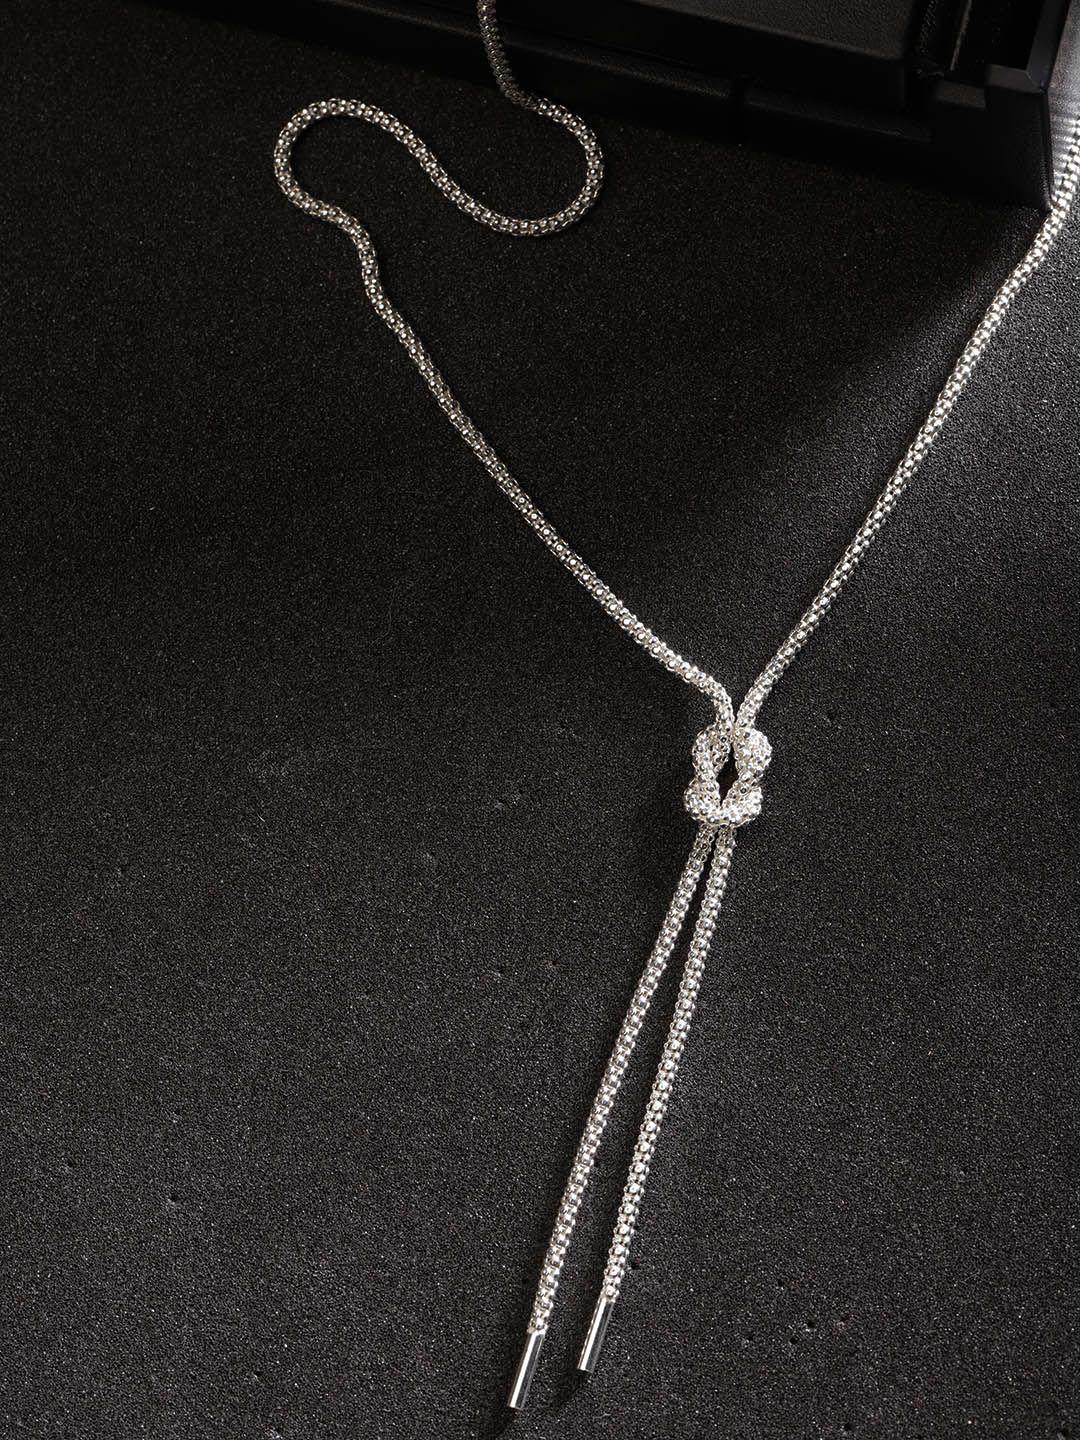 carlton london  925 sterling silver necklace